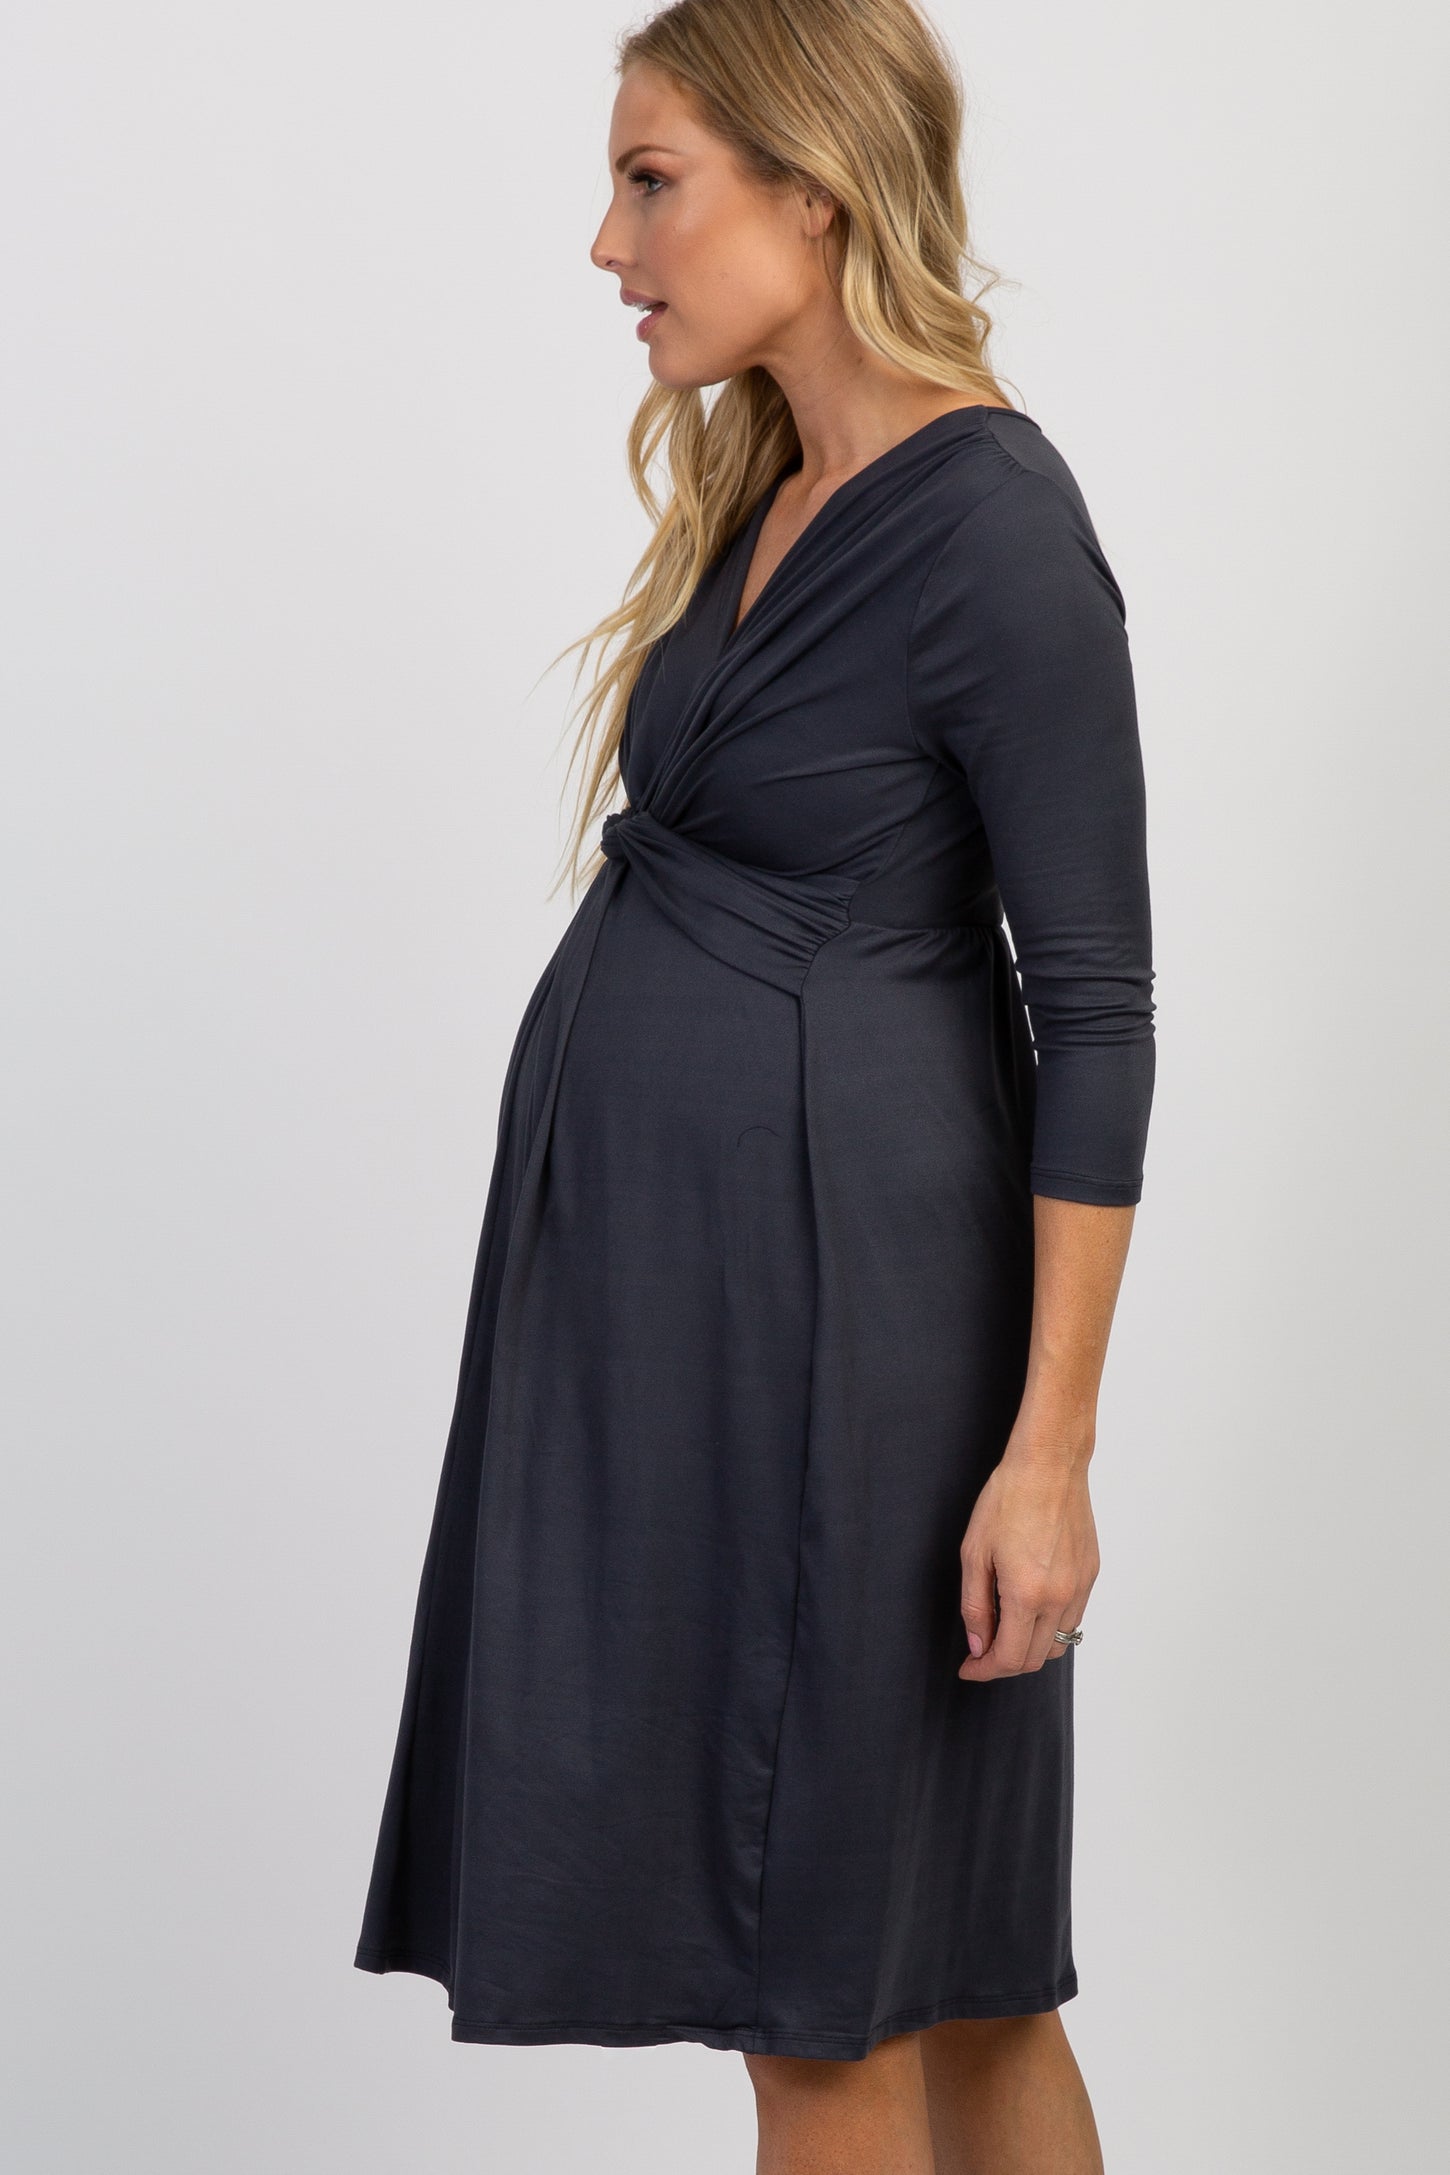 Charcoal Twist Front 3/4 Sleeve Maternity Dress